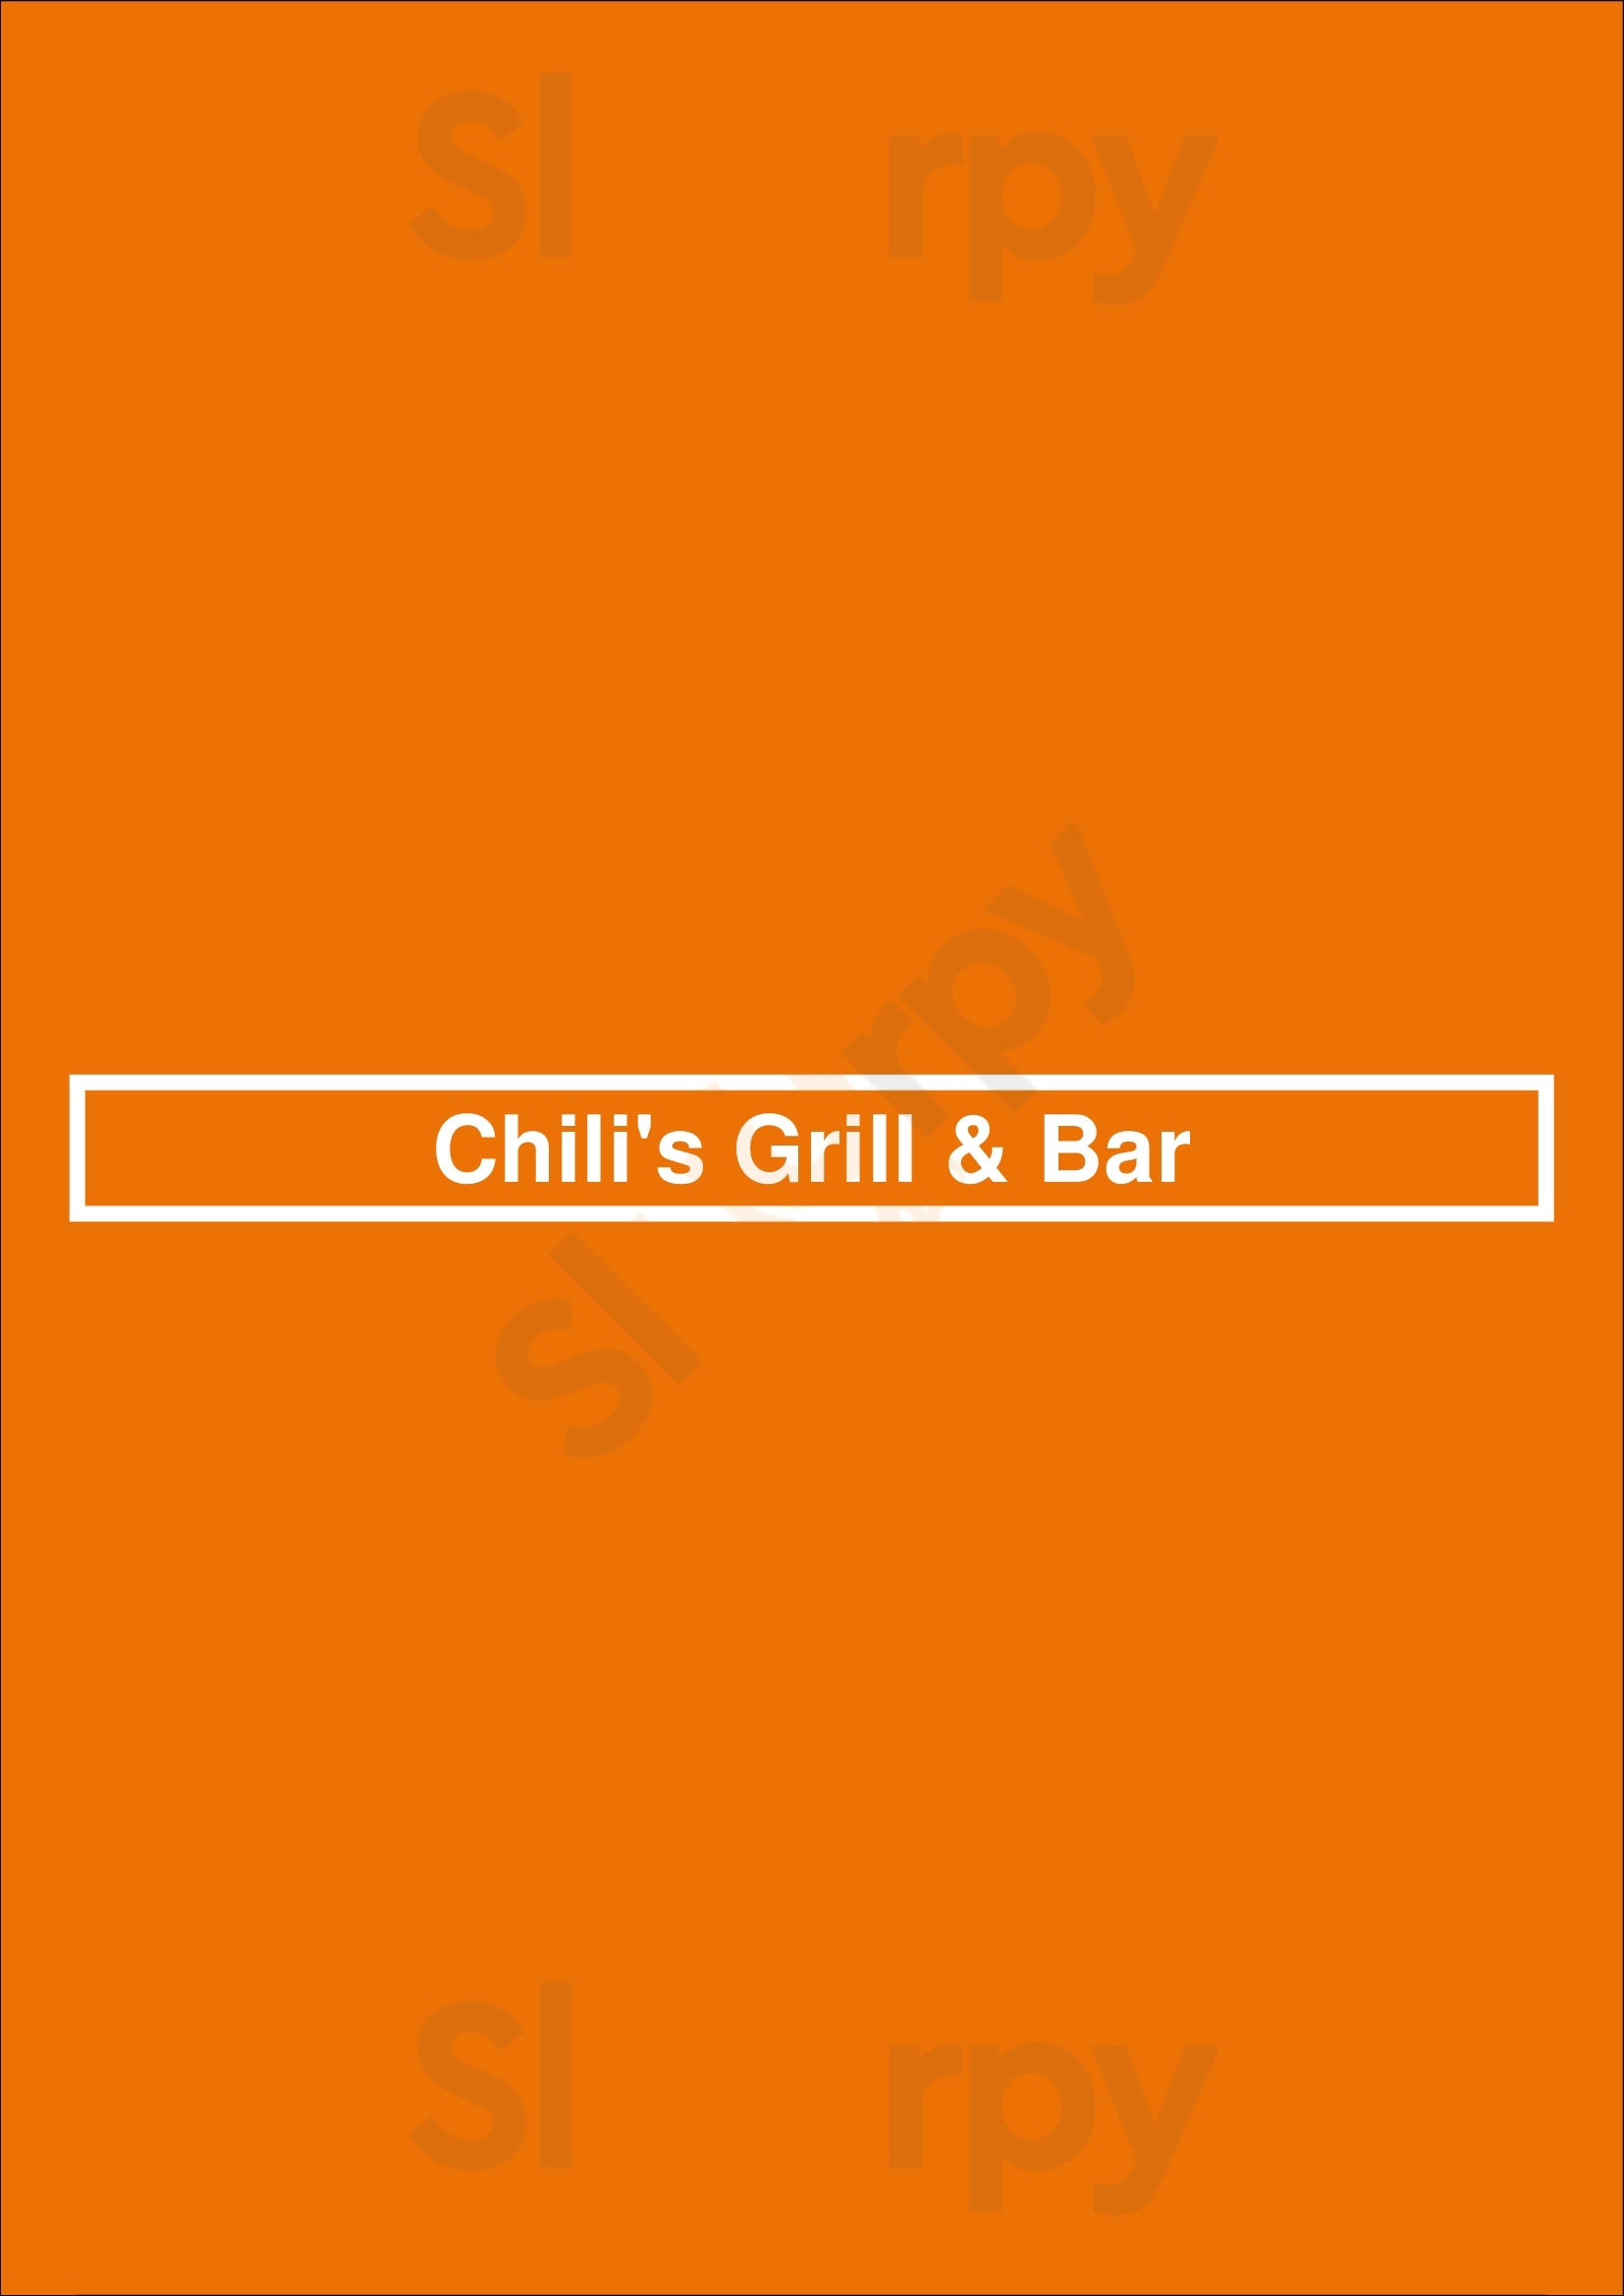 Chili's Grill & Bar Galveston Menu - 1